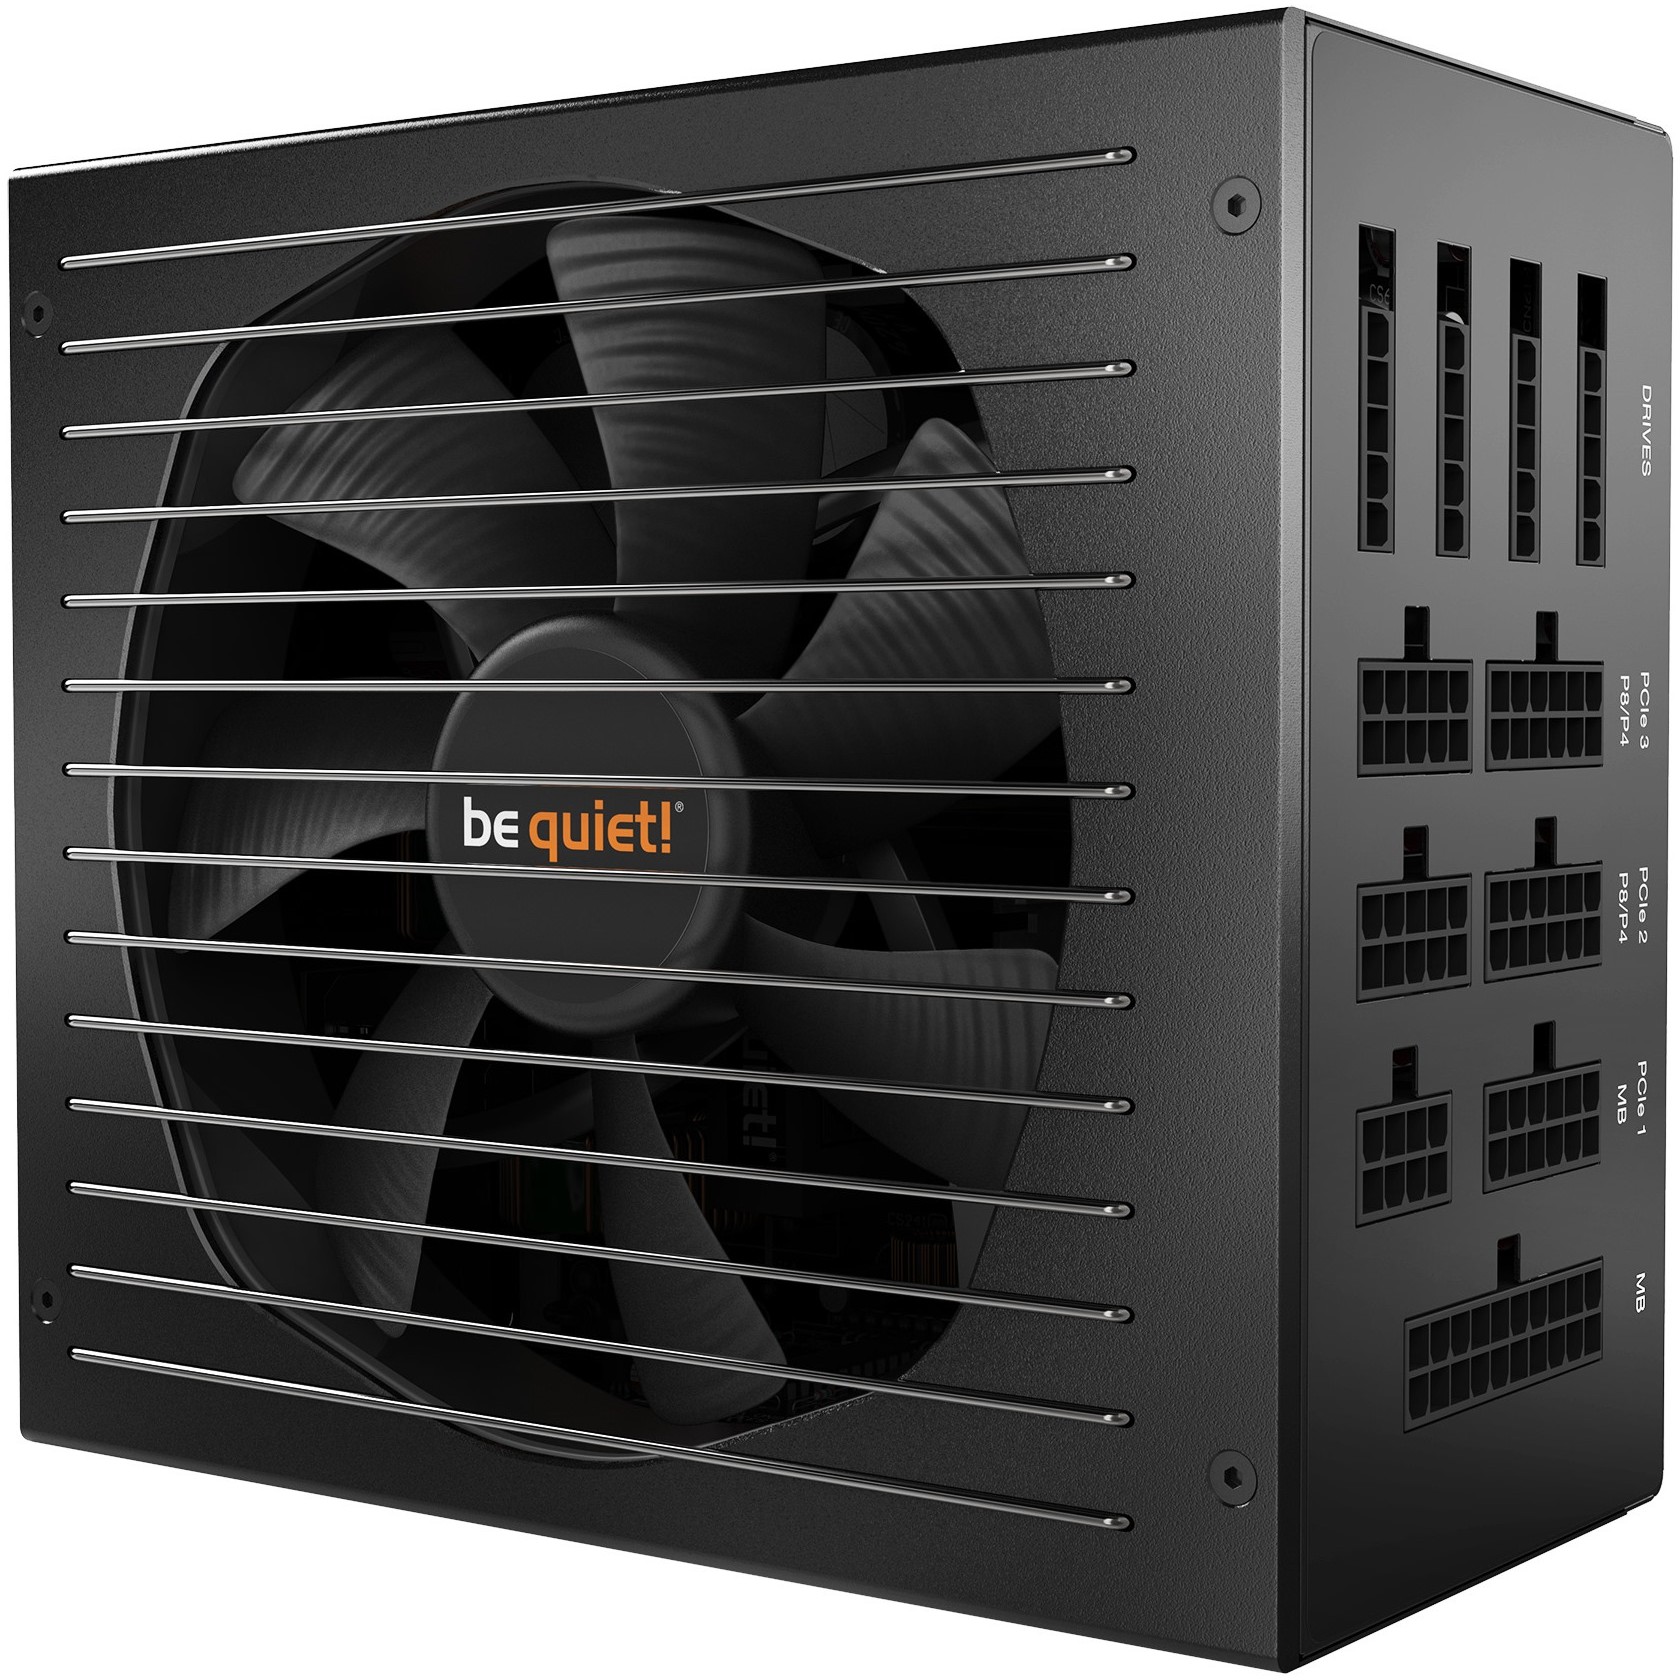 be quiet! Straight Power 11 power supply unit - BN283